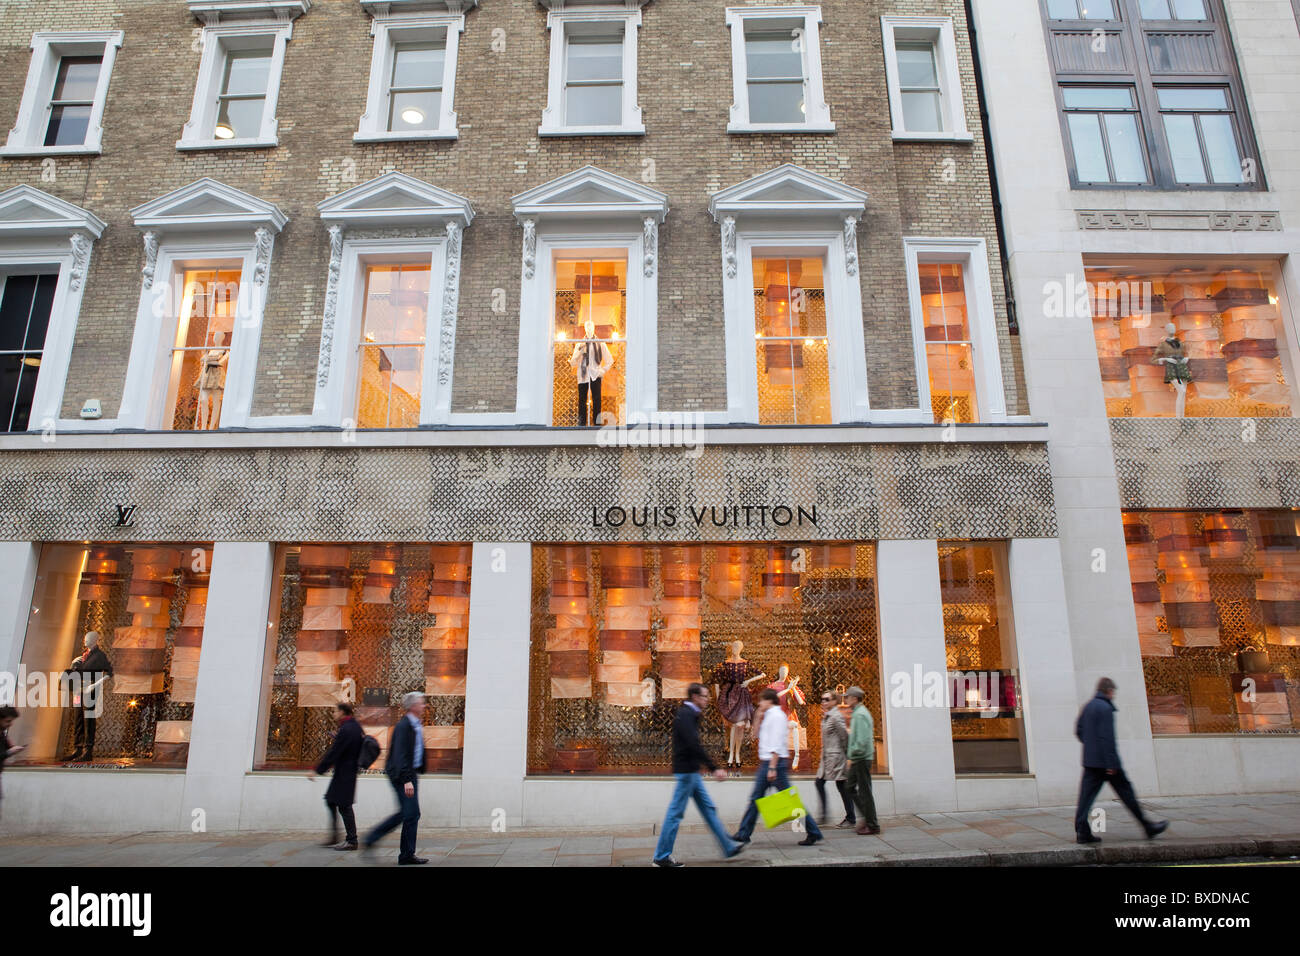 Louis Vuitton shop in New Bond street, London Stock Photo: 33493556 - Alamy